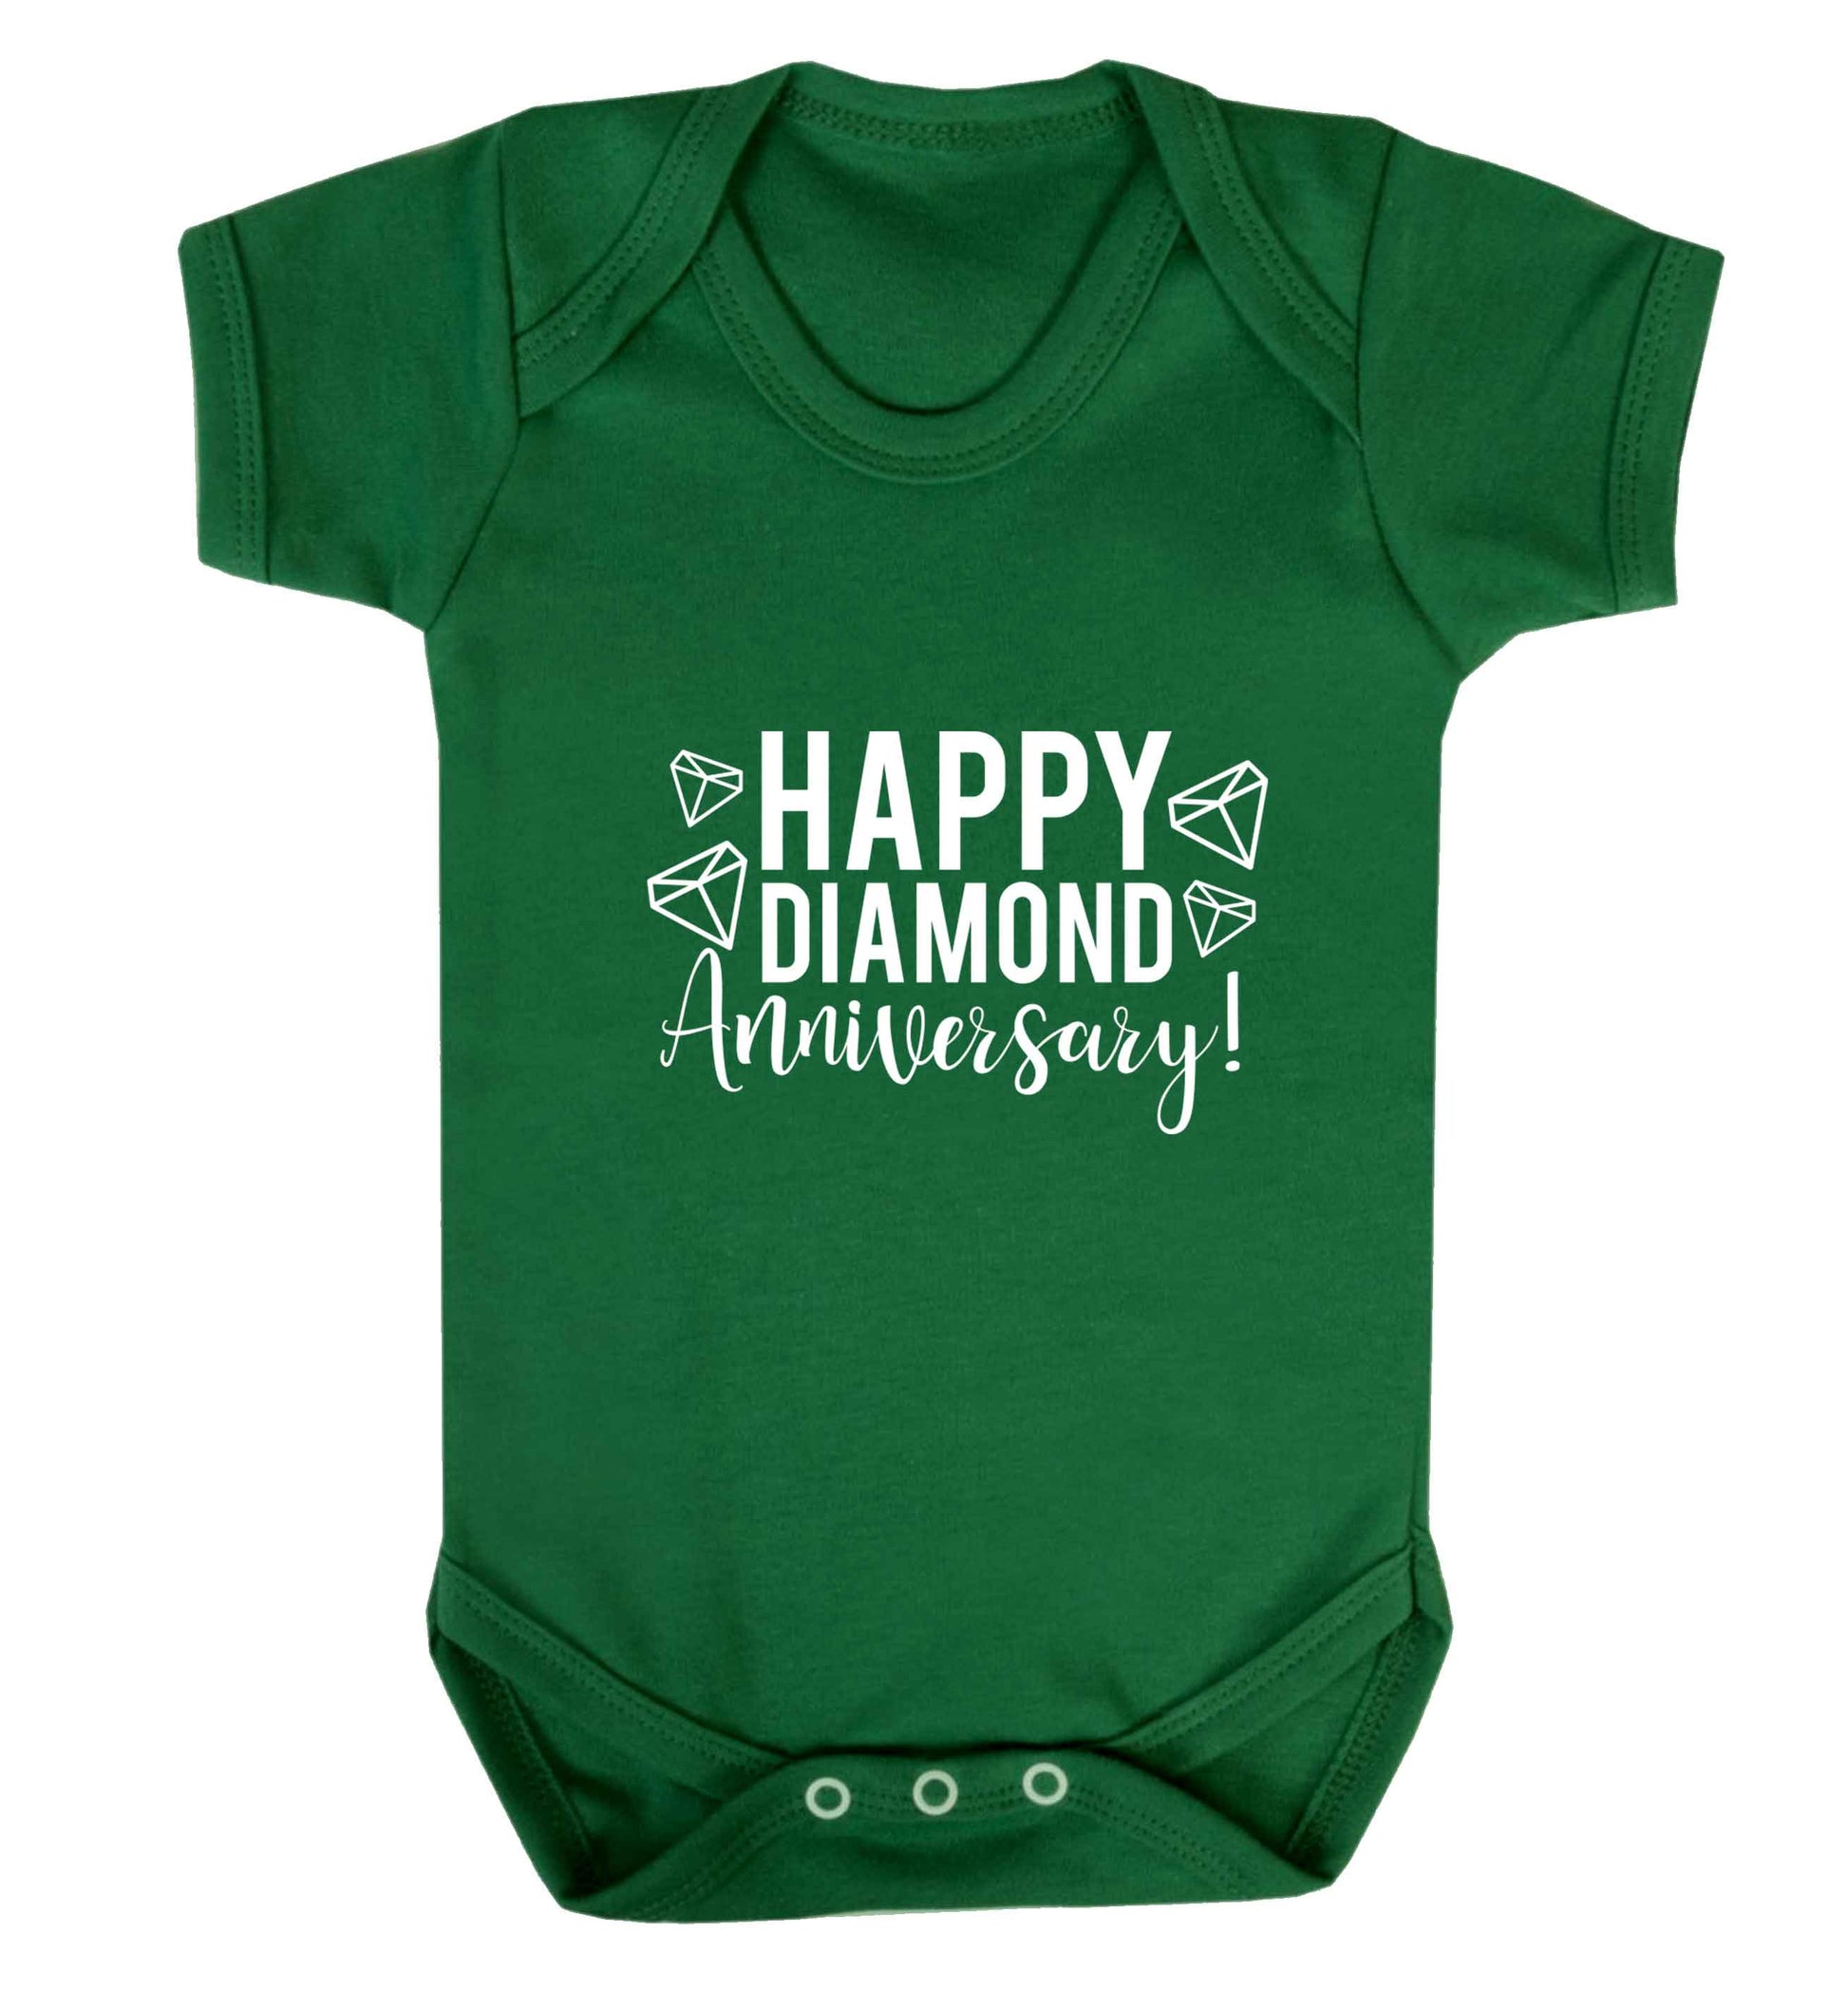 Happy diamond anniversary! baby vest green 18-24 months